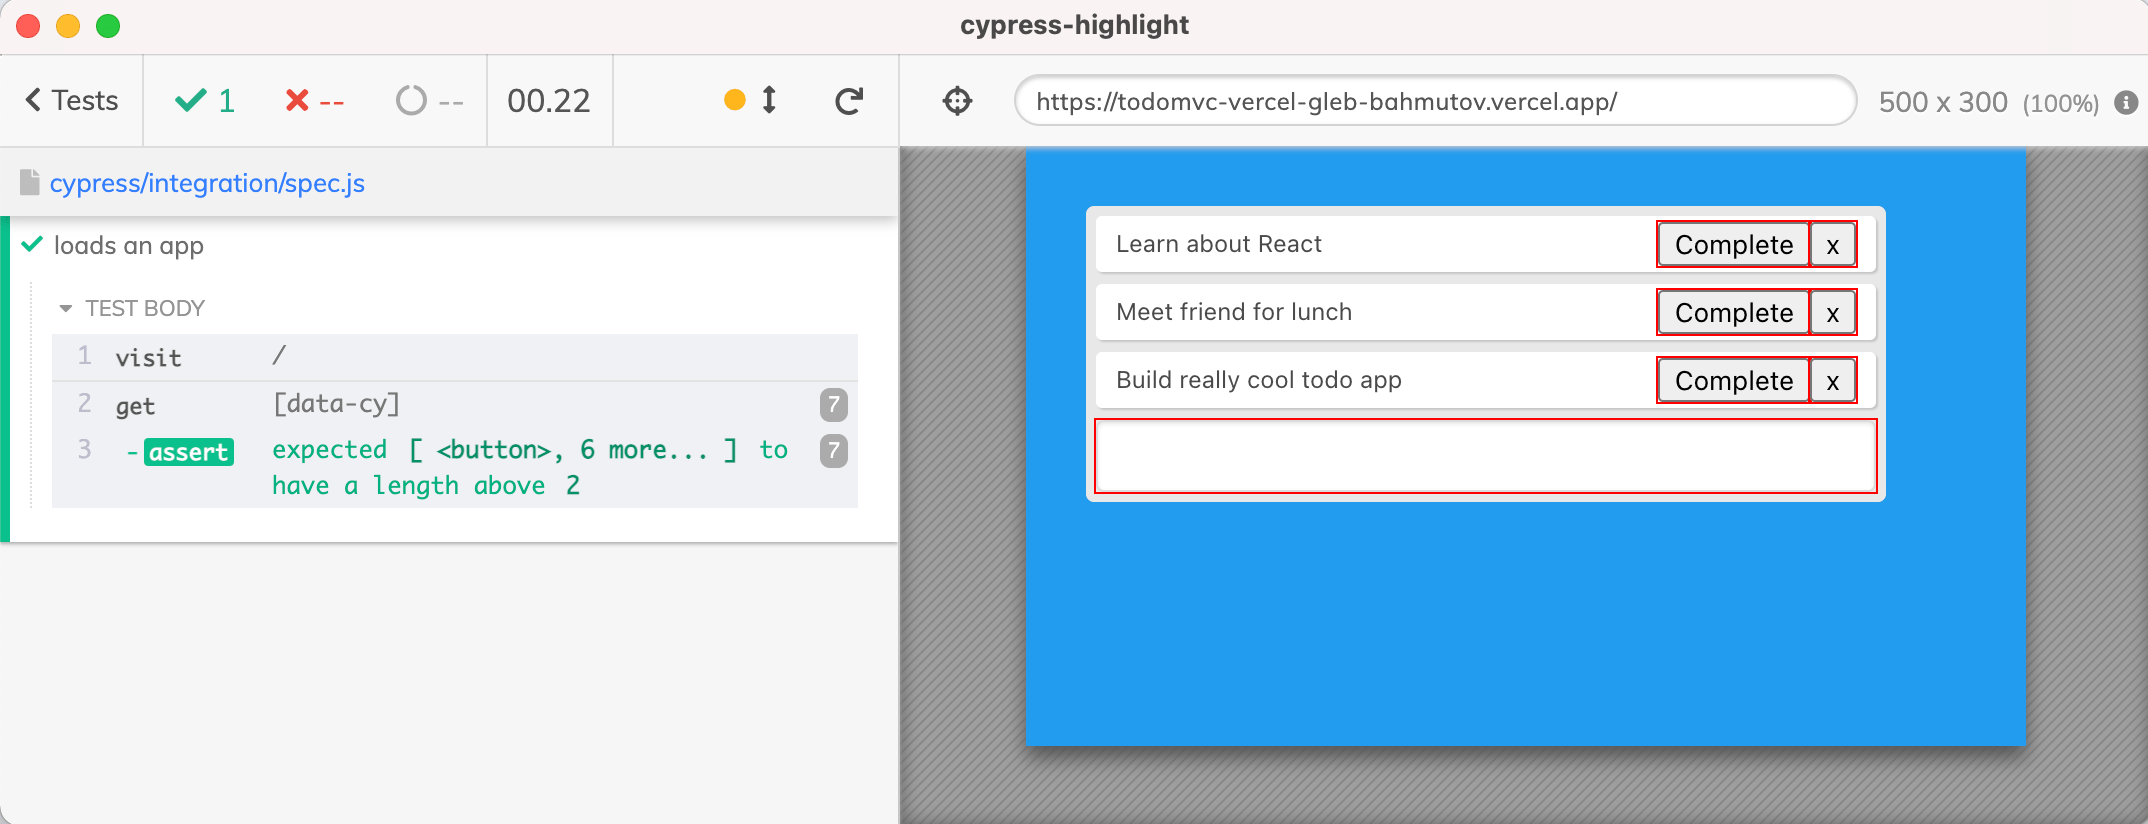 cypress-highlight